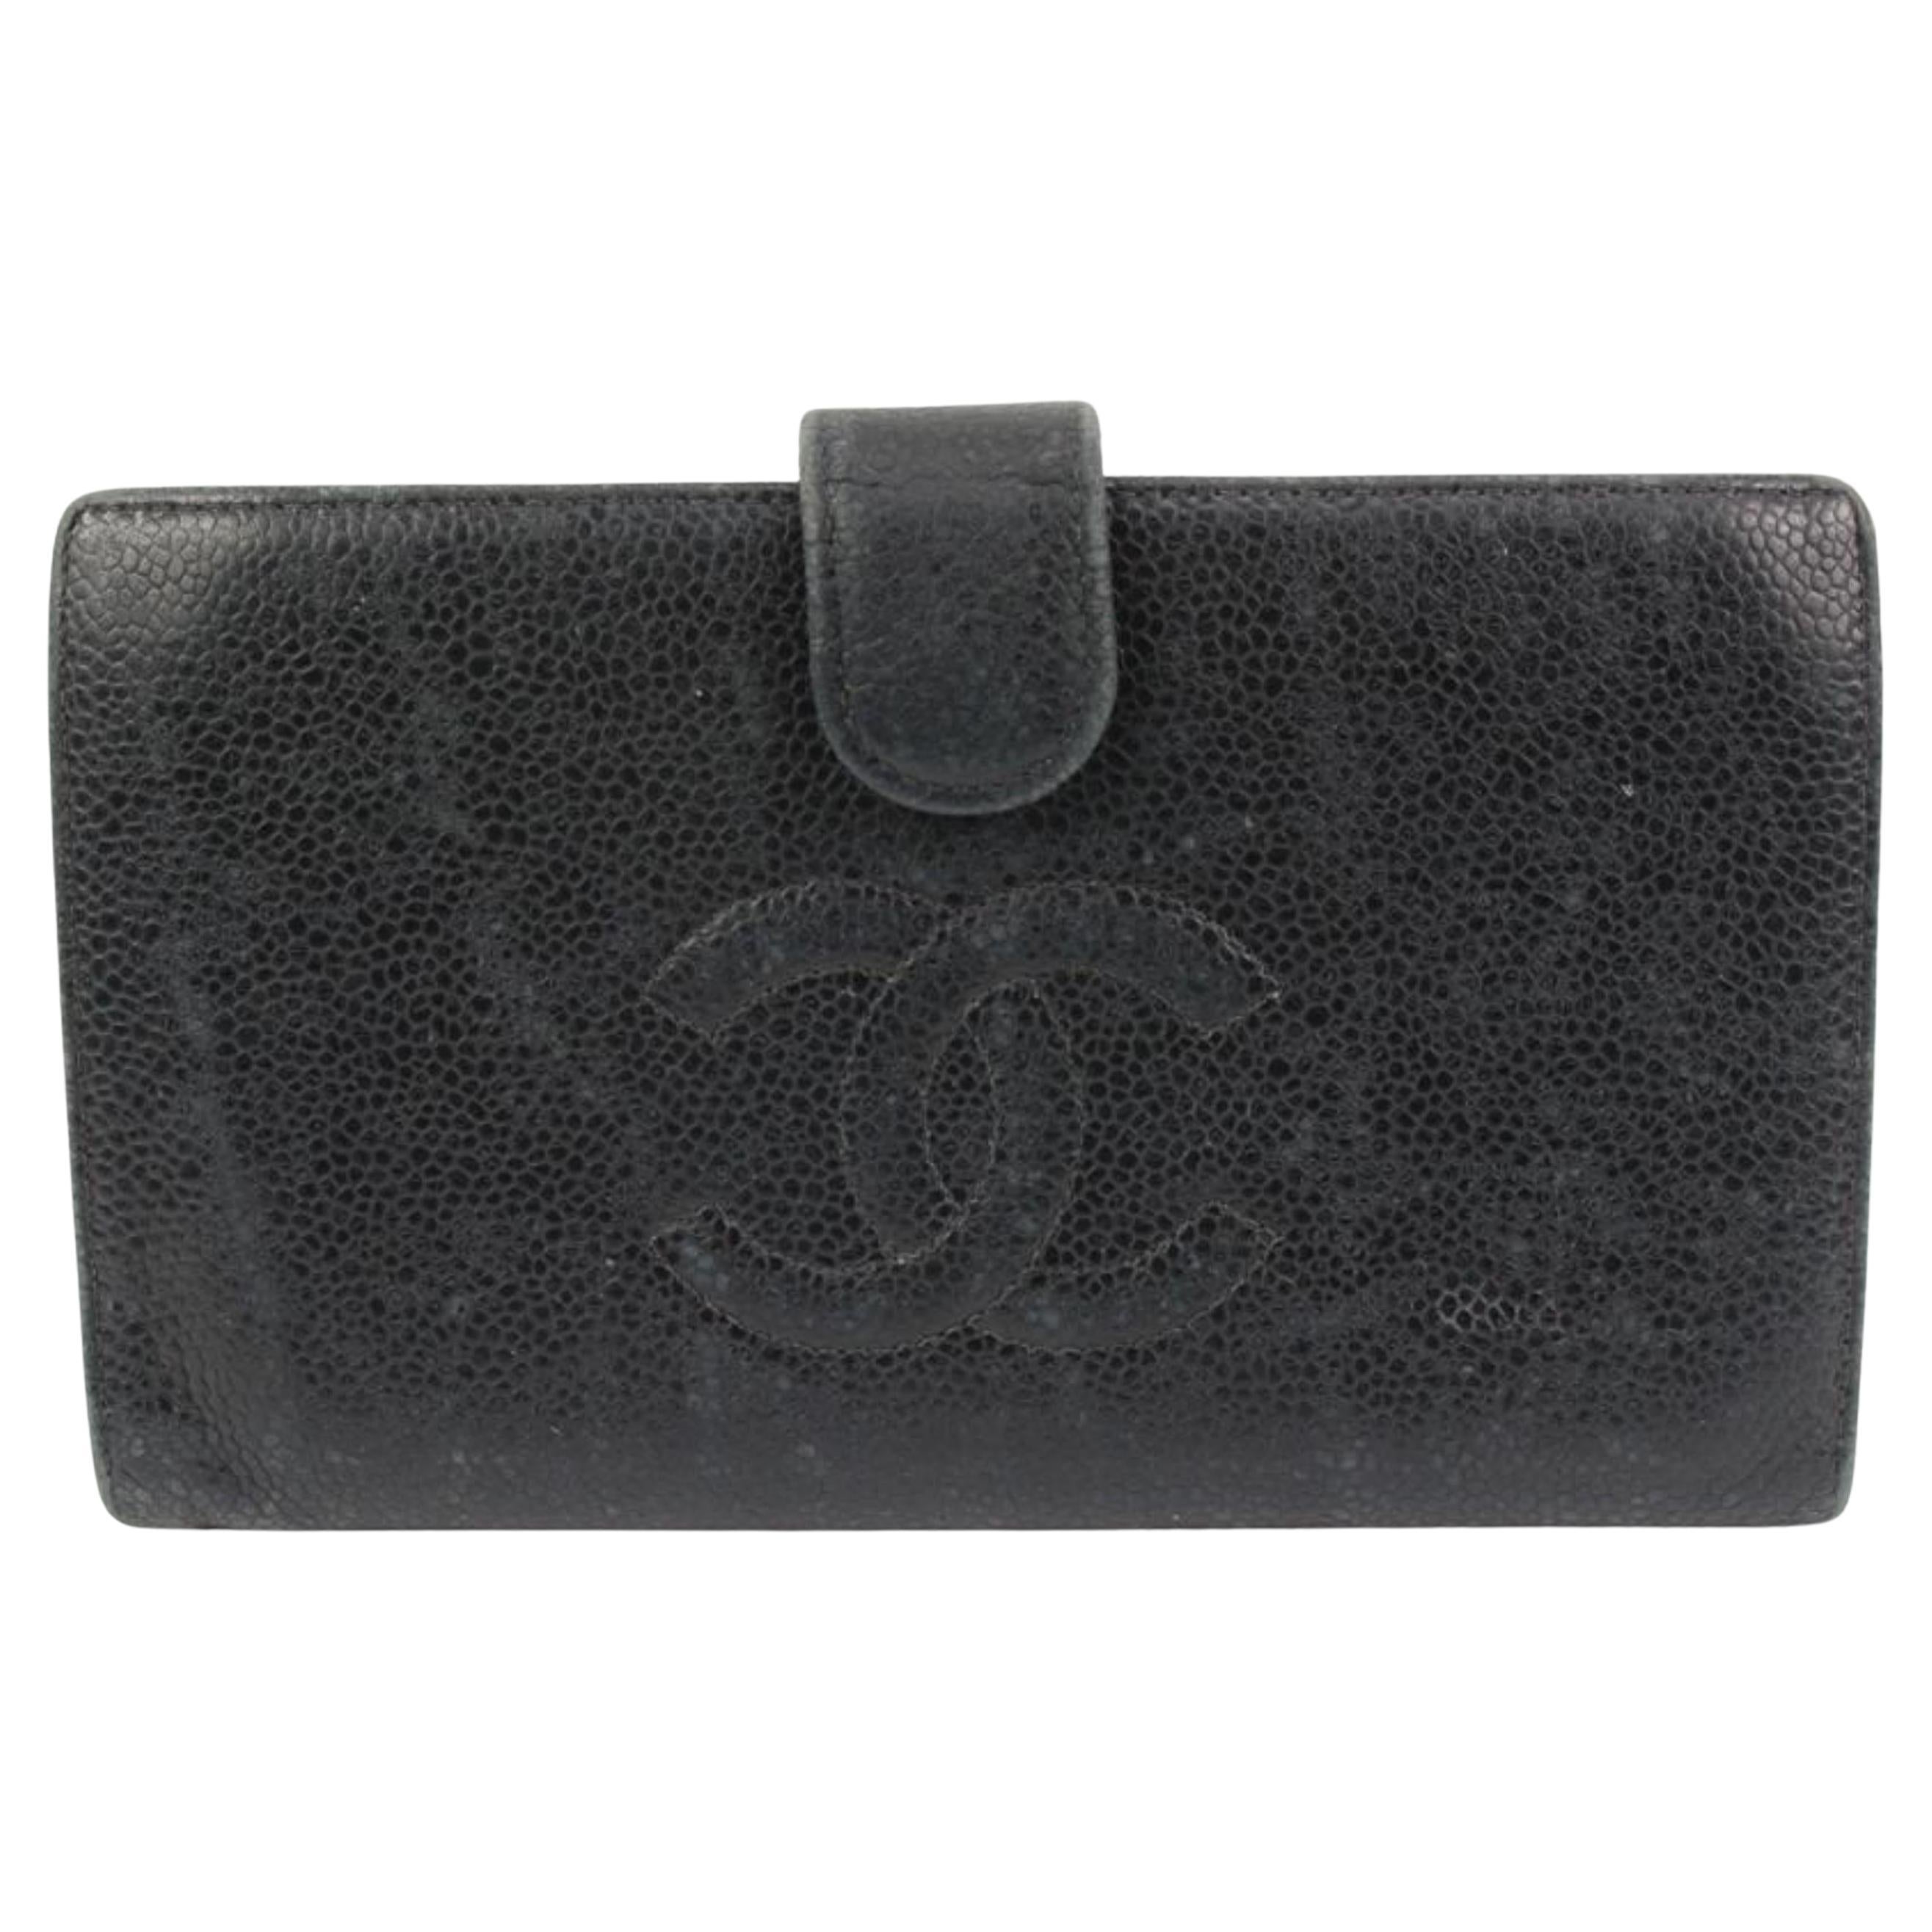 Chanel Black Caviar Leather CC Logo Long Flap Wallet 95ck323s For Sale